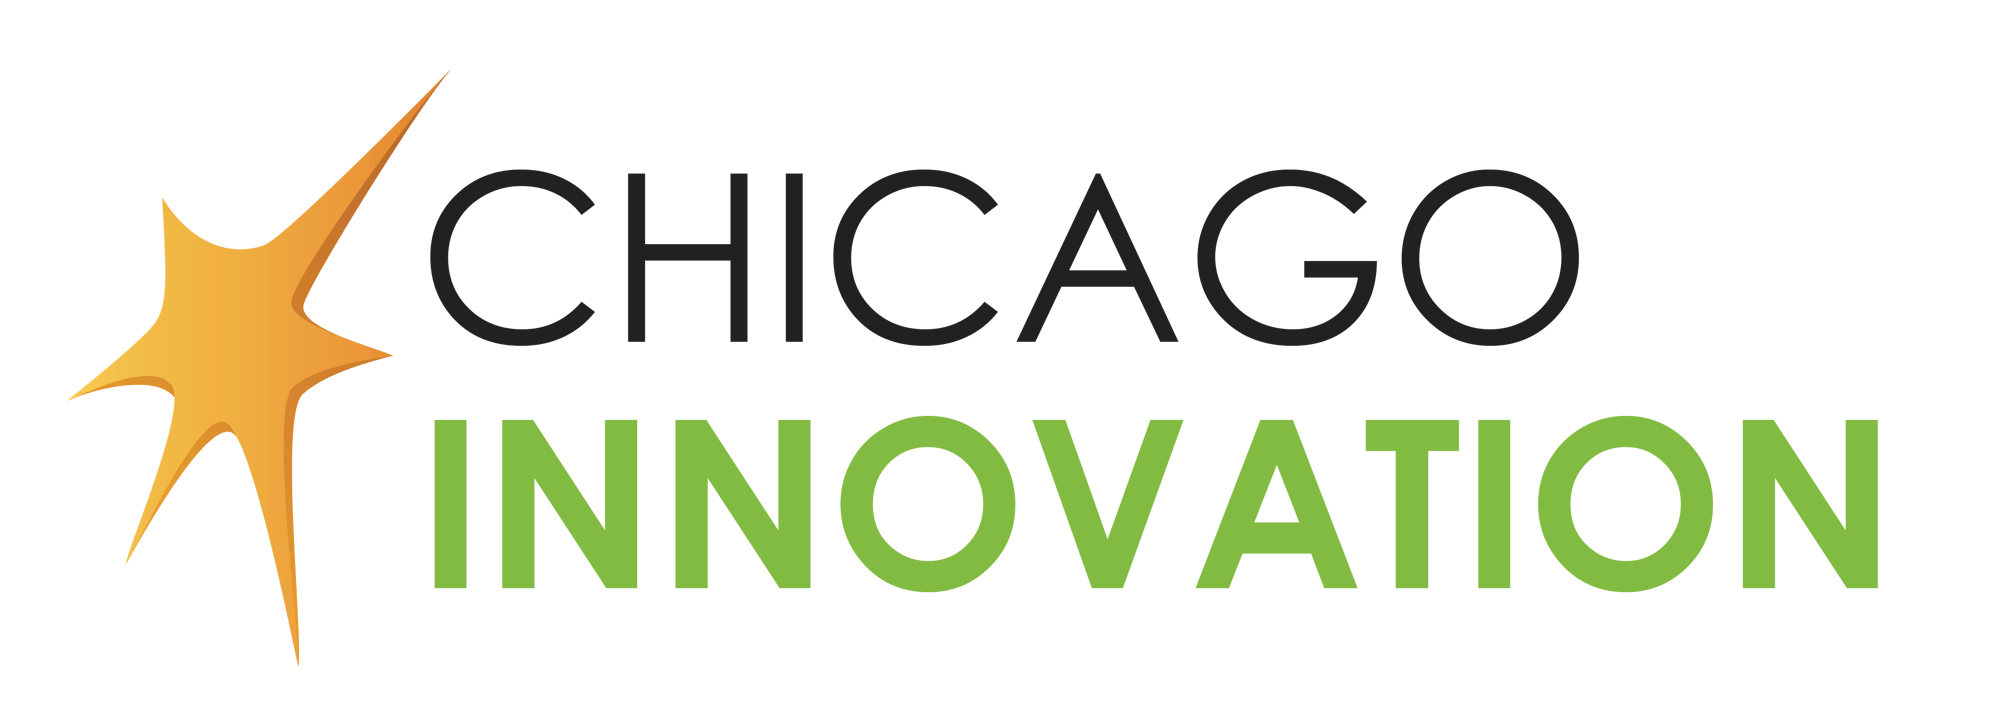 Chicago Innovation